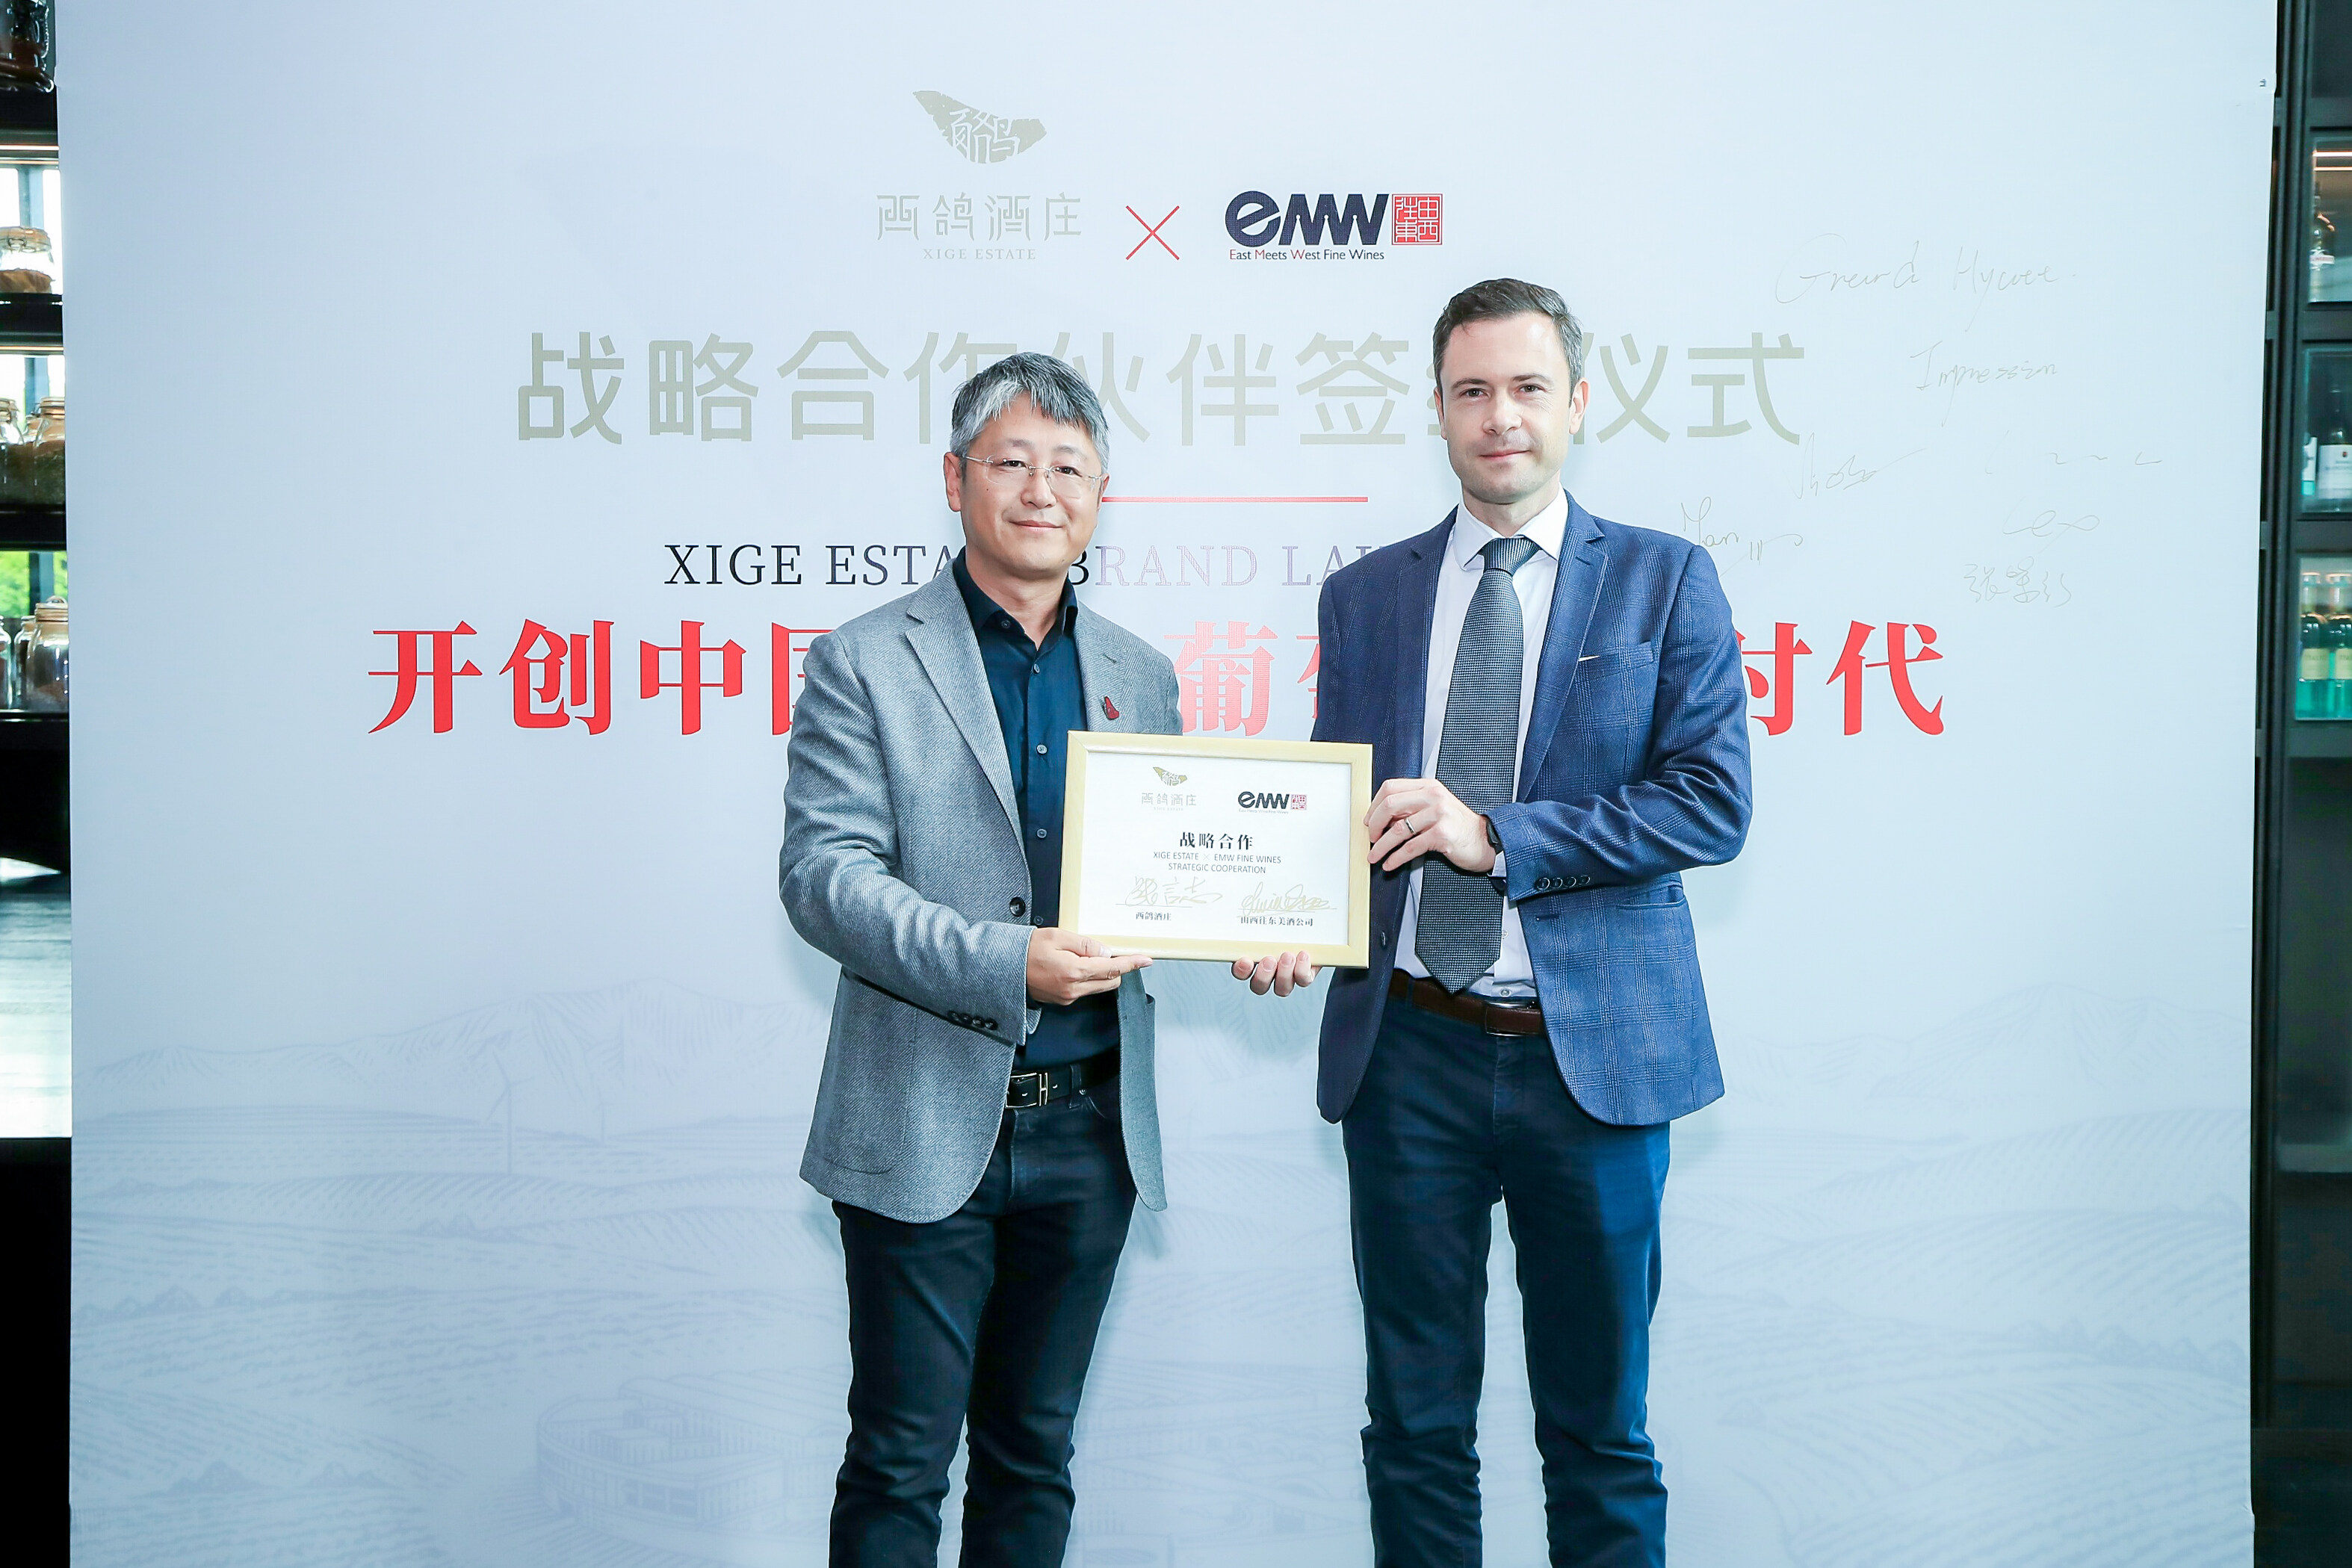 EMW丨与西鸽正式签约战略合作伙伴协议 开创中国精品葡萄酒新时代